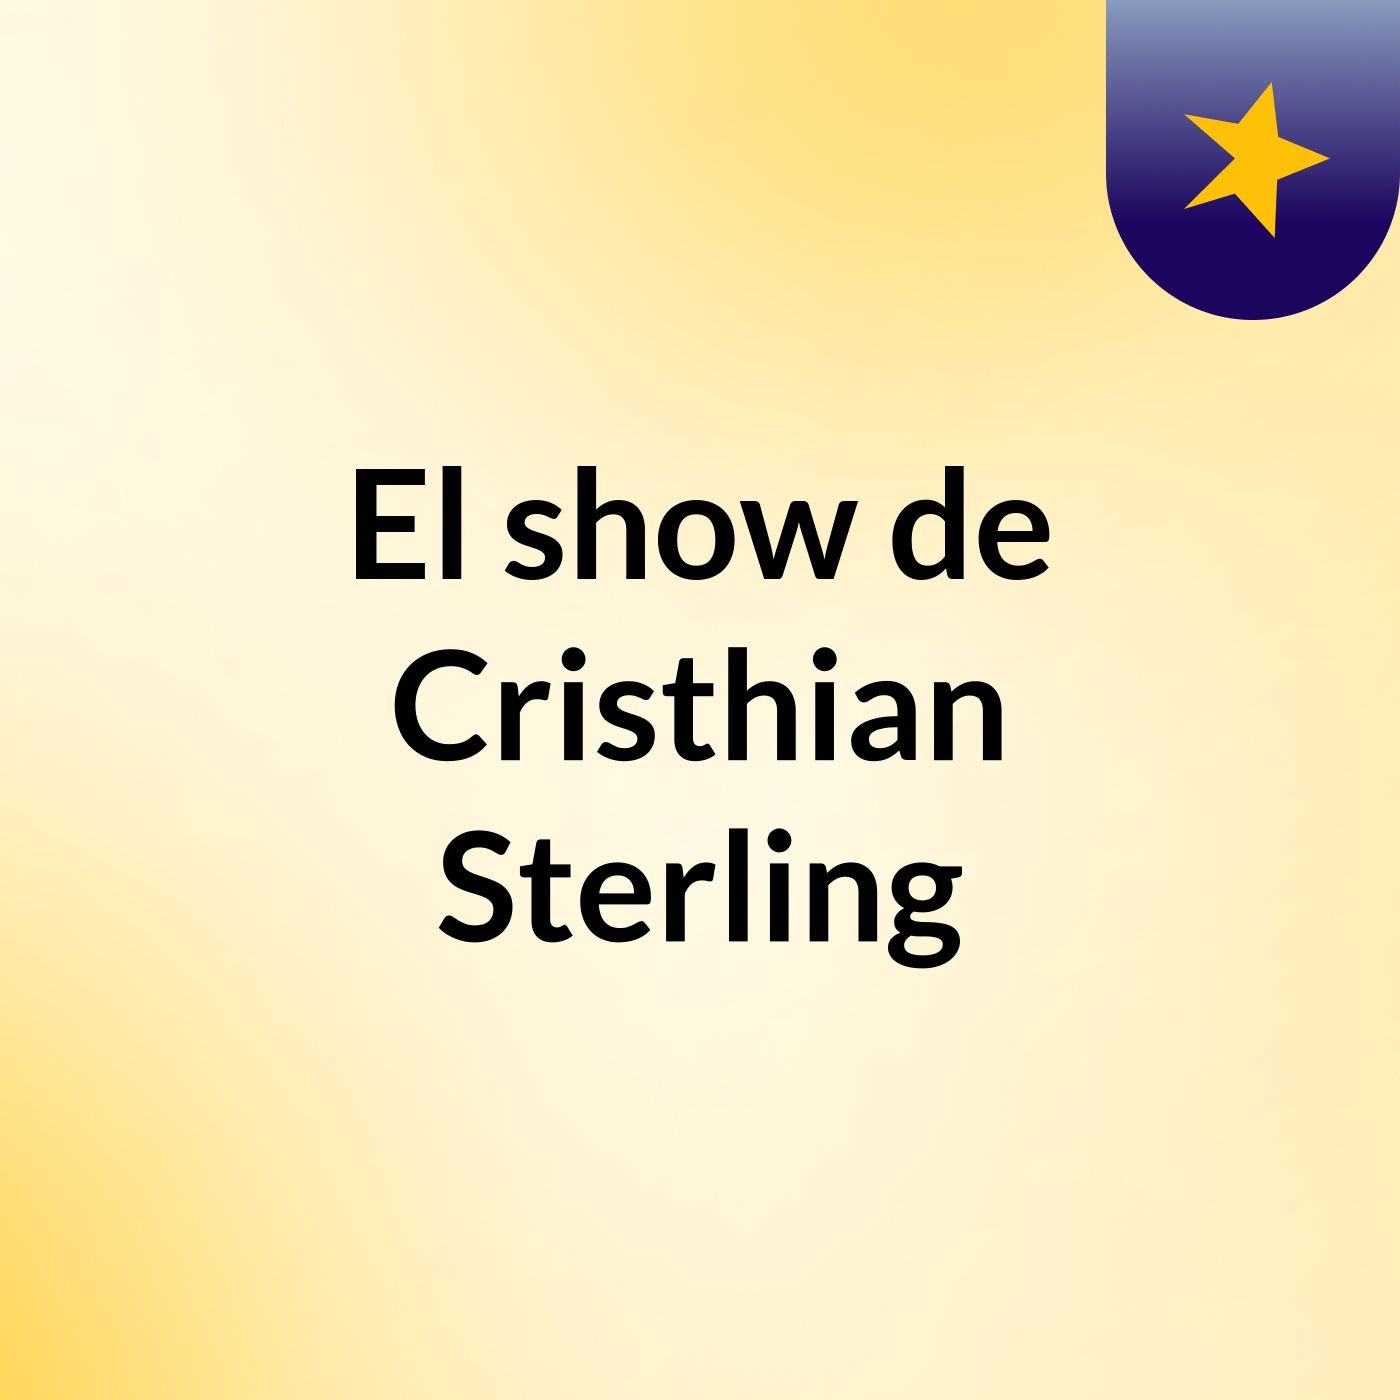 El show de Cristhian Sterling